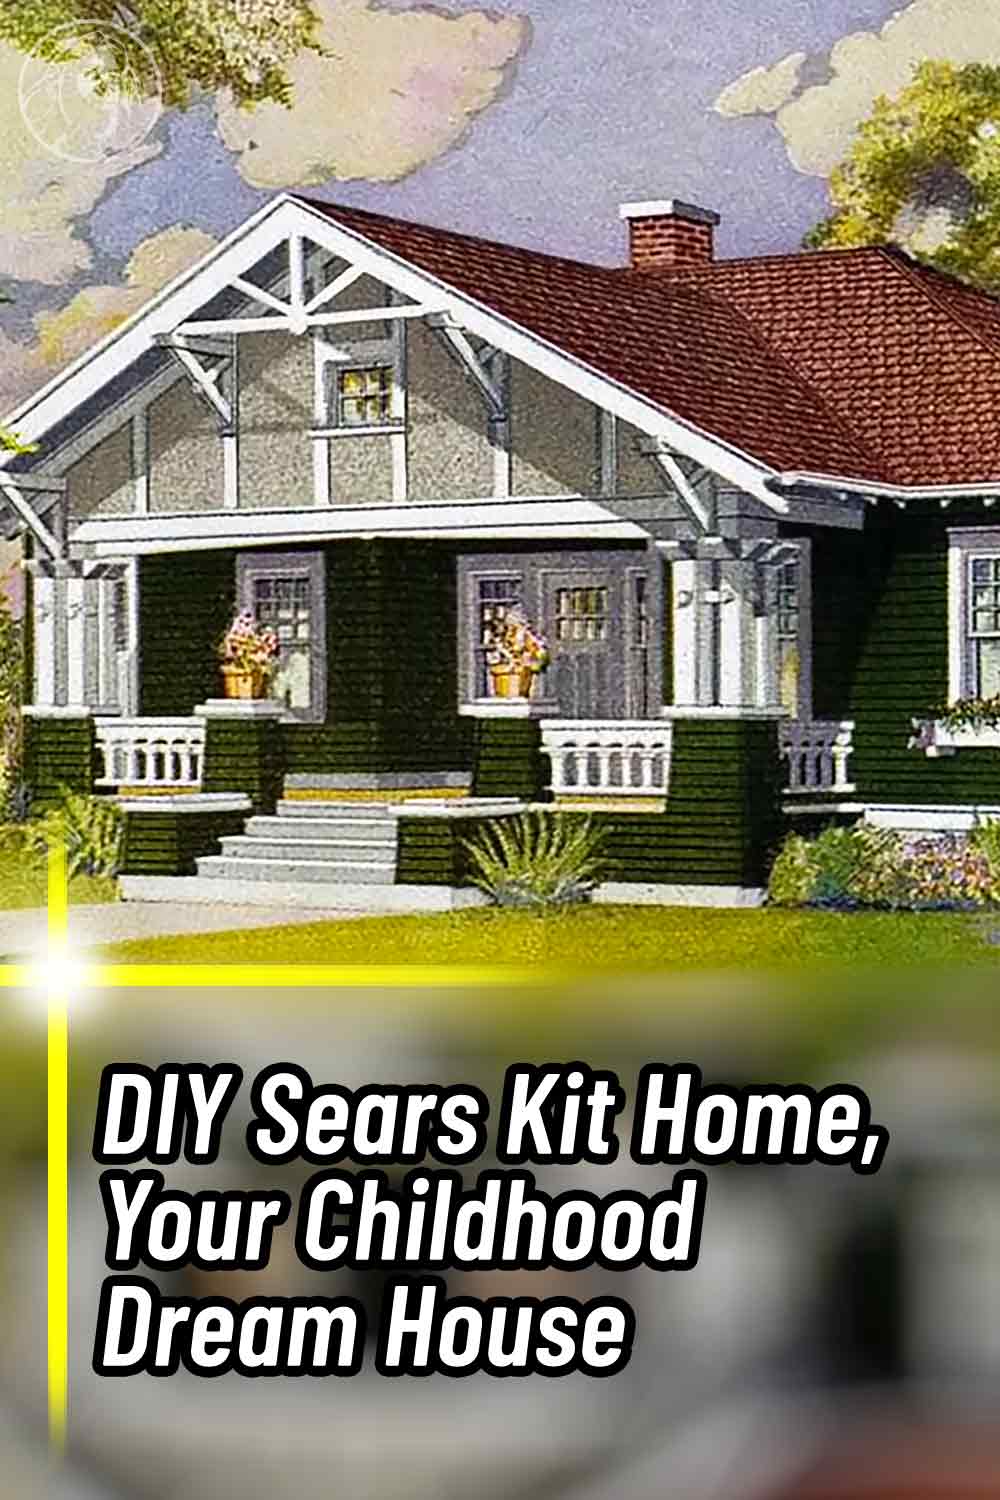 DIY Sears Kit Home, Your Childhood Dream House